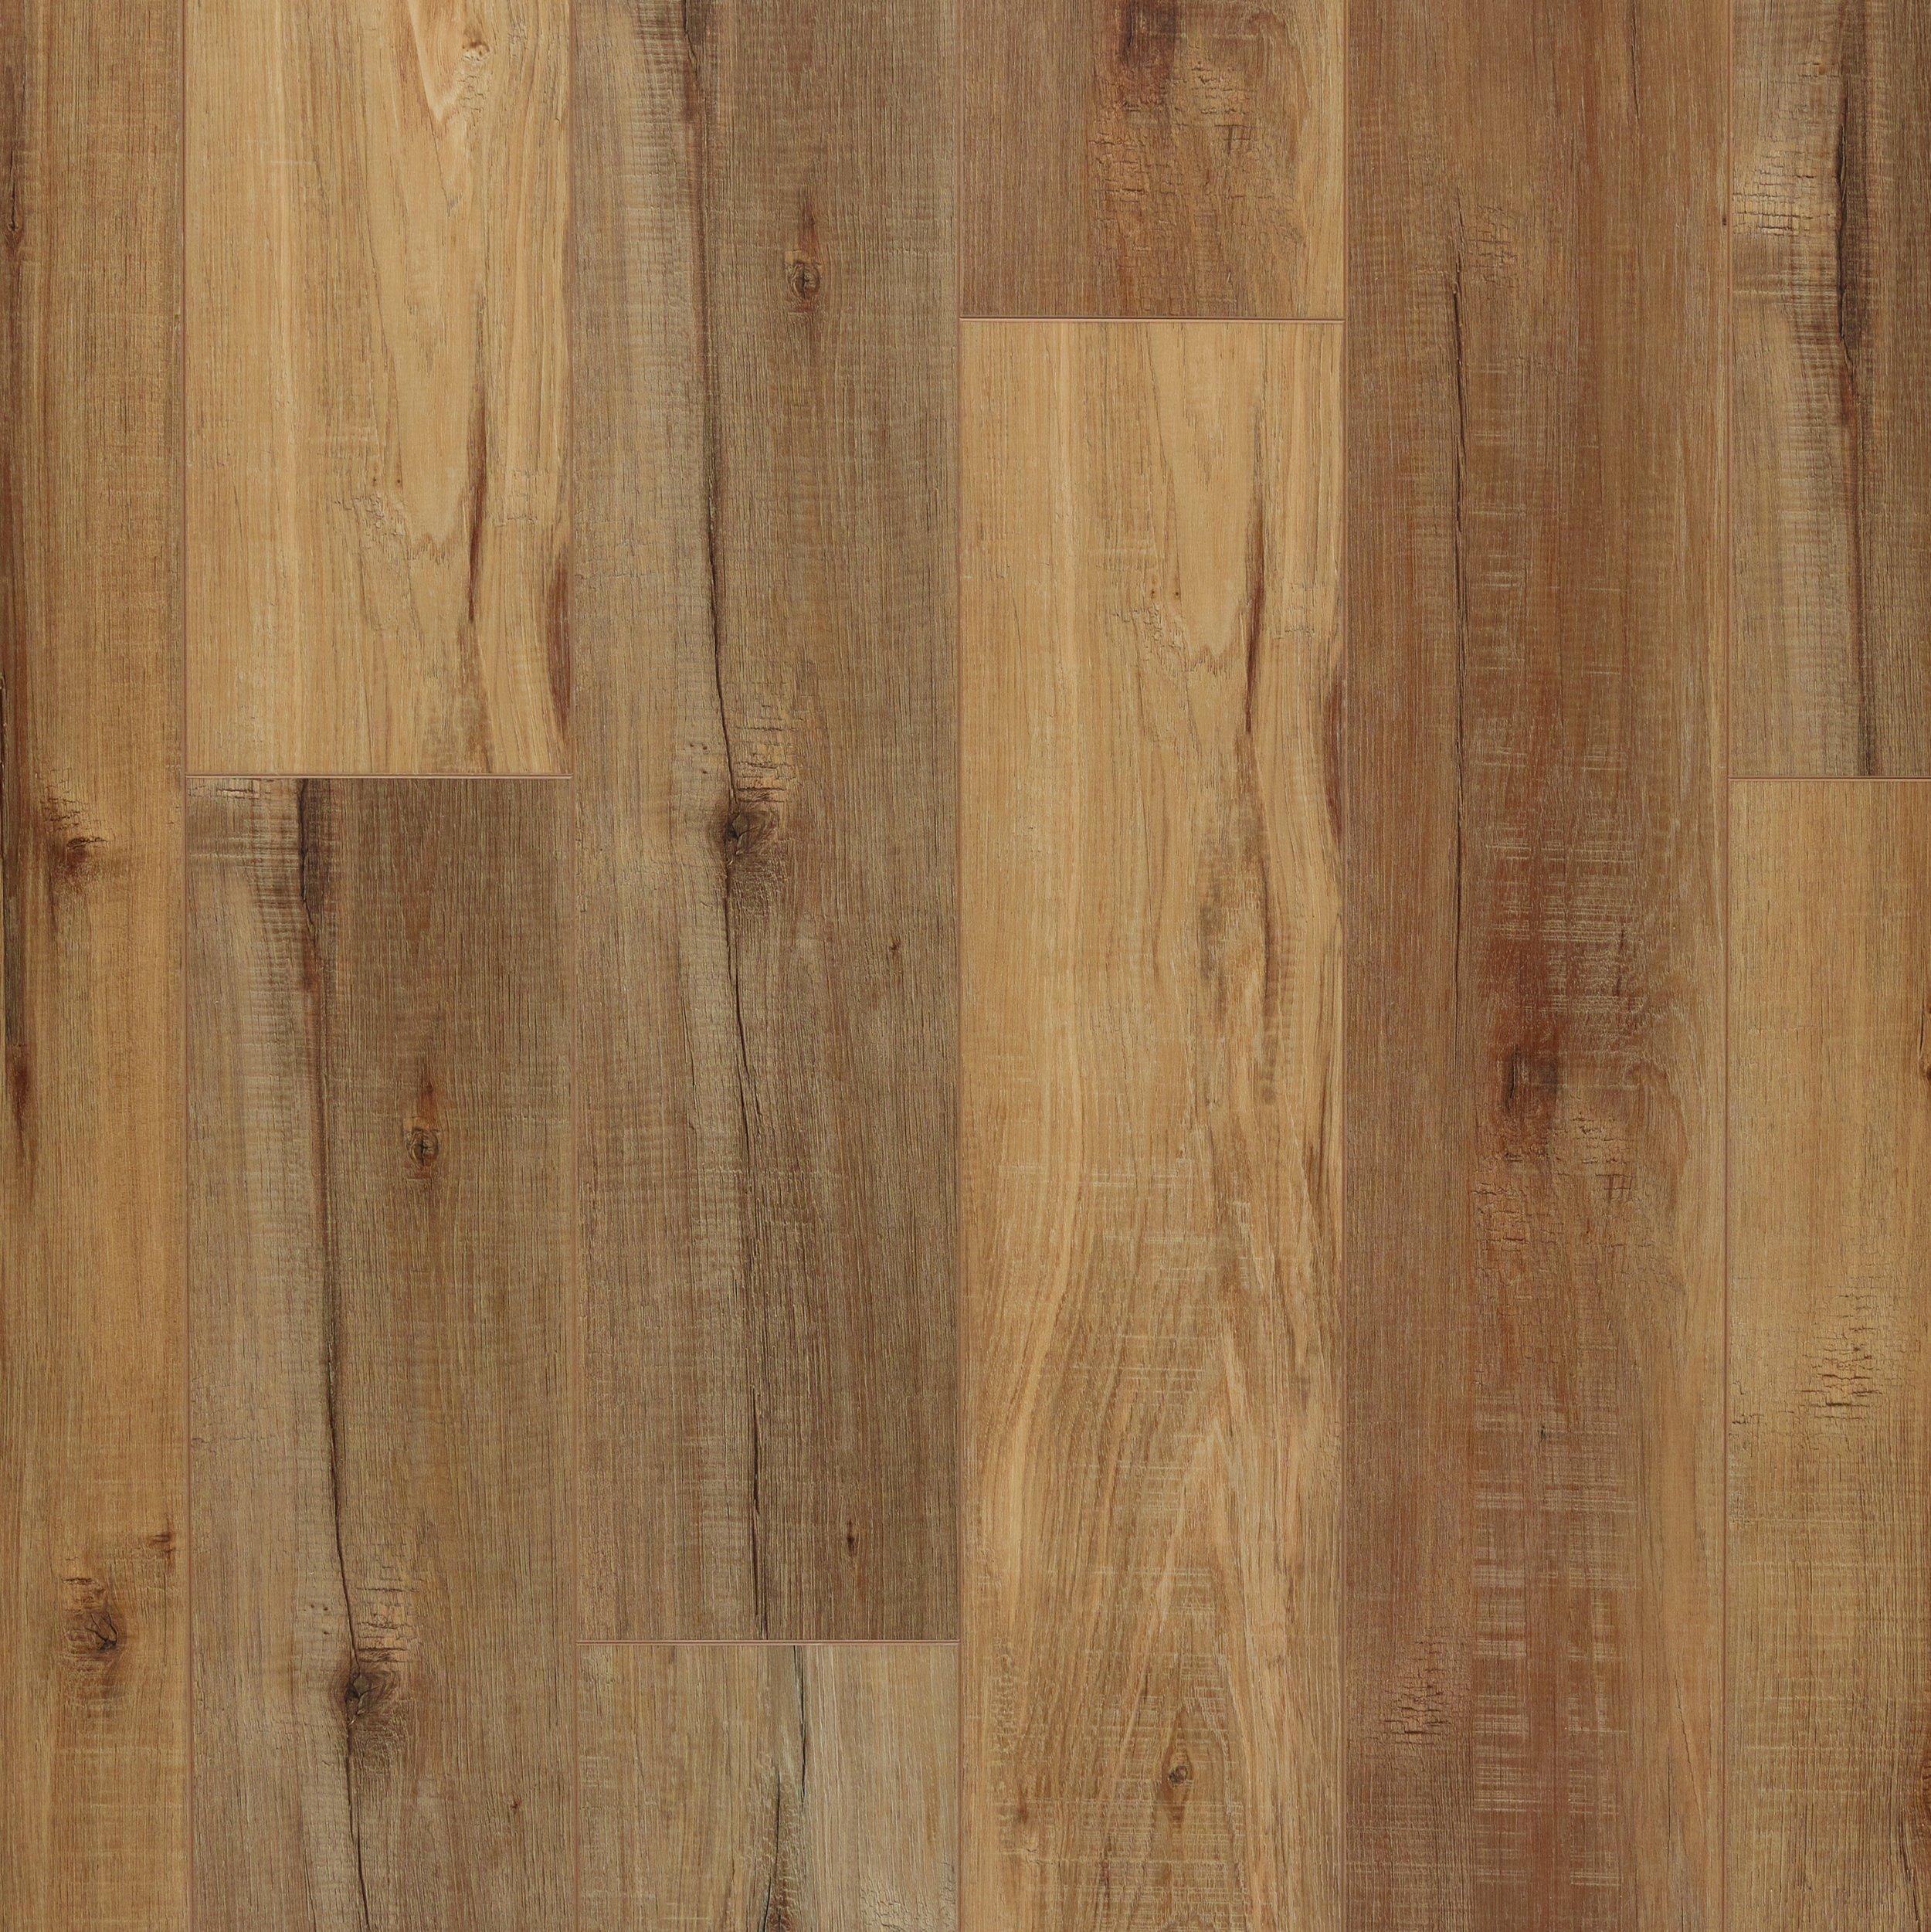 Pompano Pine Rigid Core Luxury Vinyl, Vinyl Plank Flooring With Cork Backing Reviews